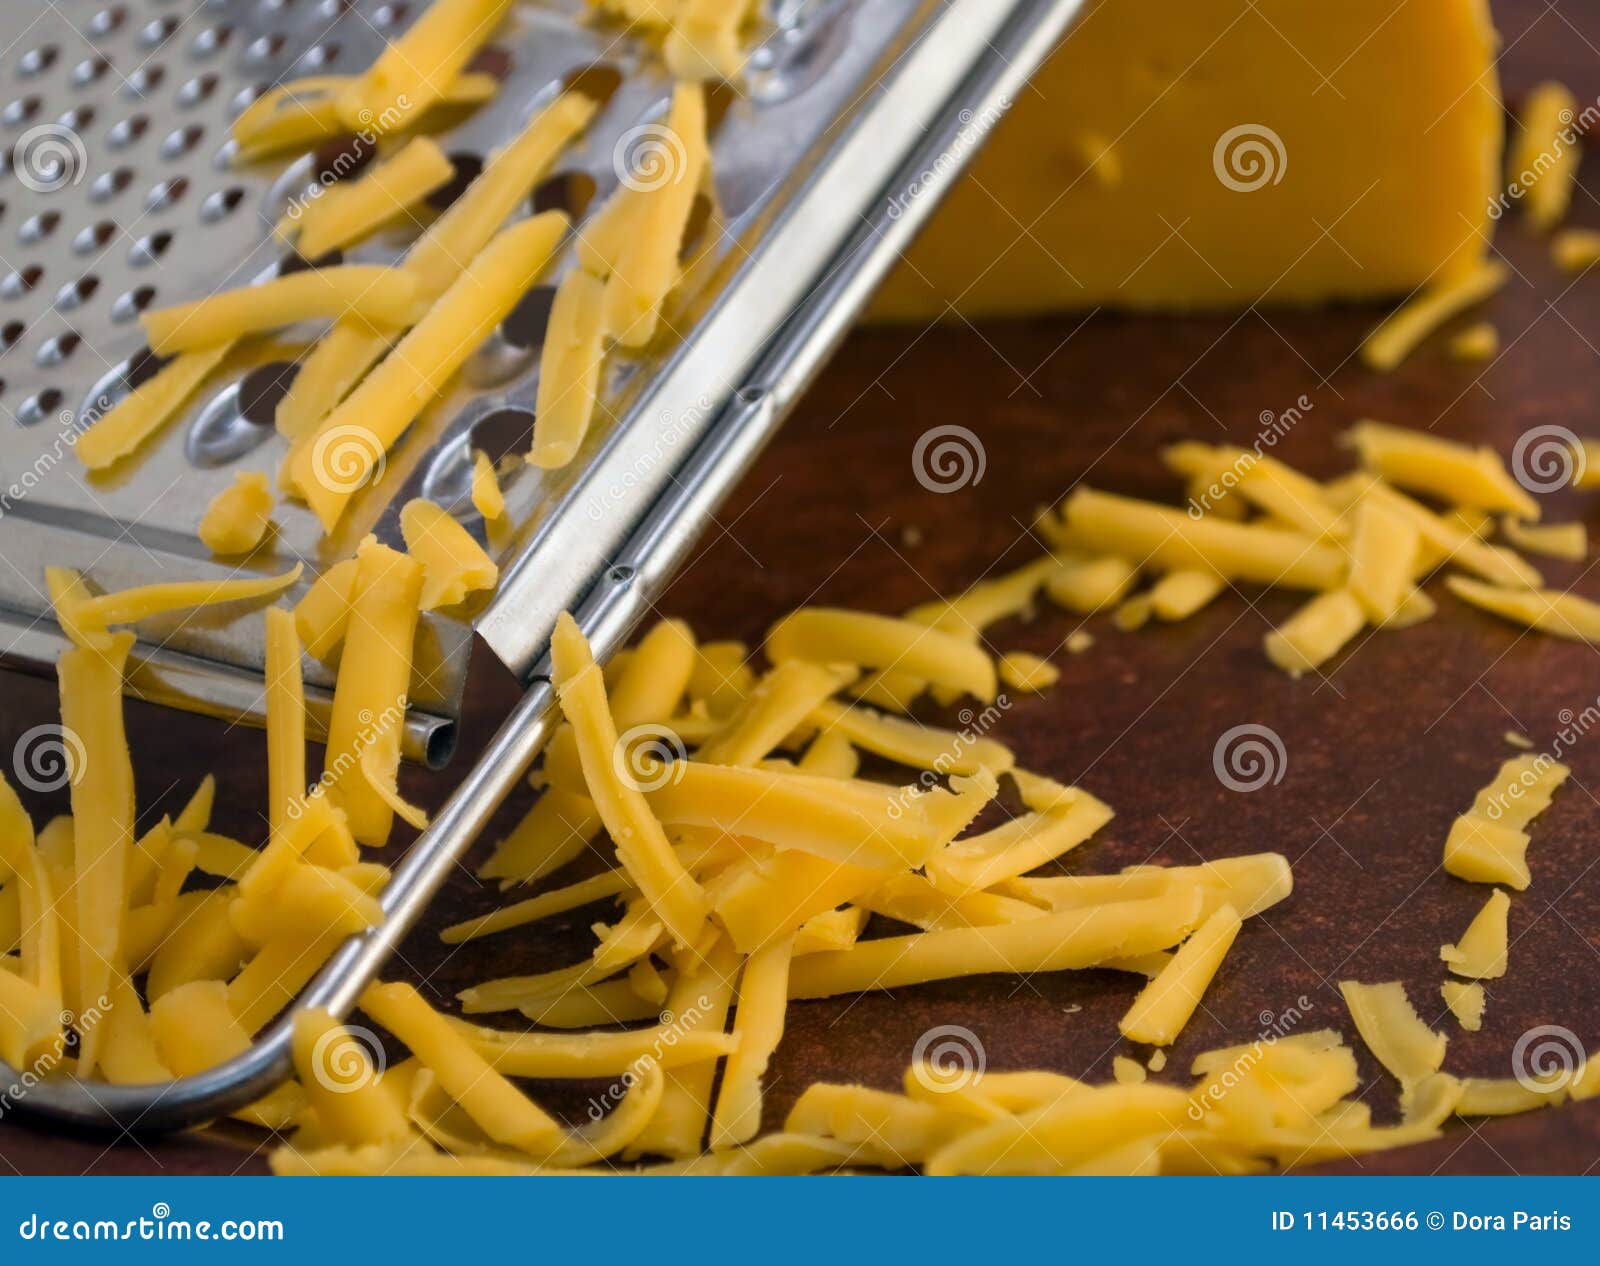 Shredded cheddar stock photo. Image of tool, orange, kitchen - 11453666